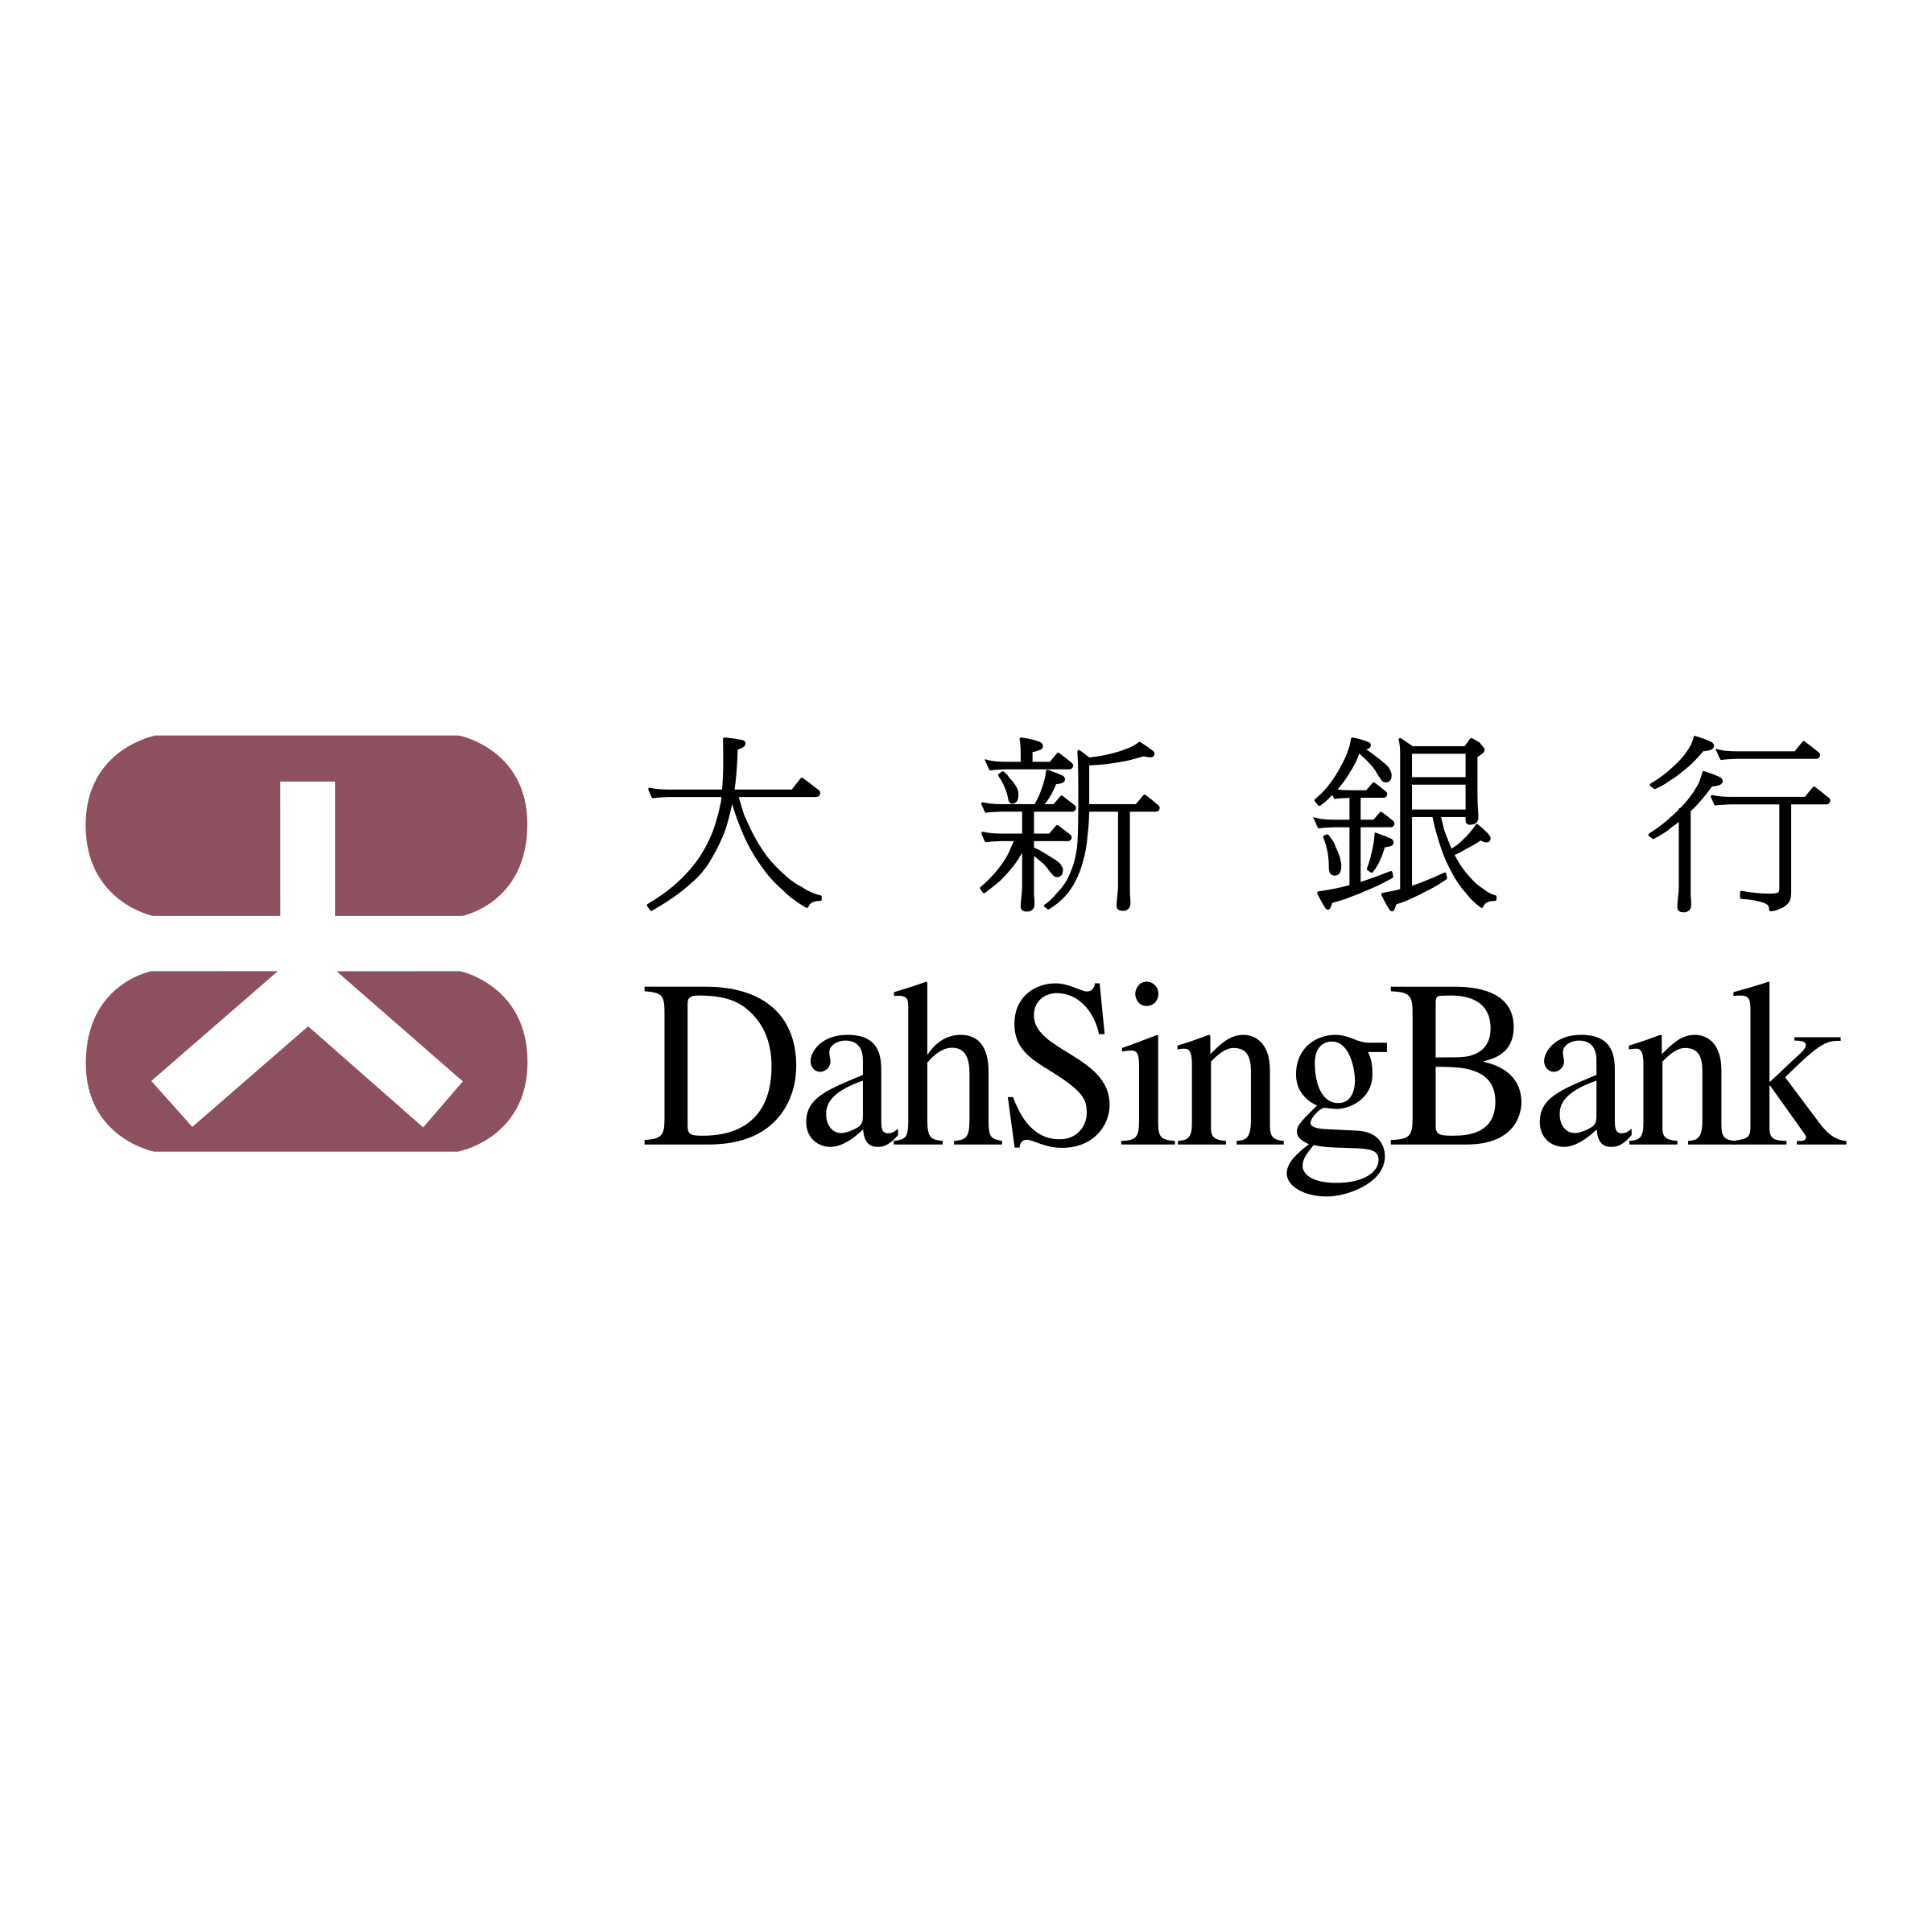 Sing Logo - Dah Sing Bank Logo PNG Transparent & SVG Vector